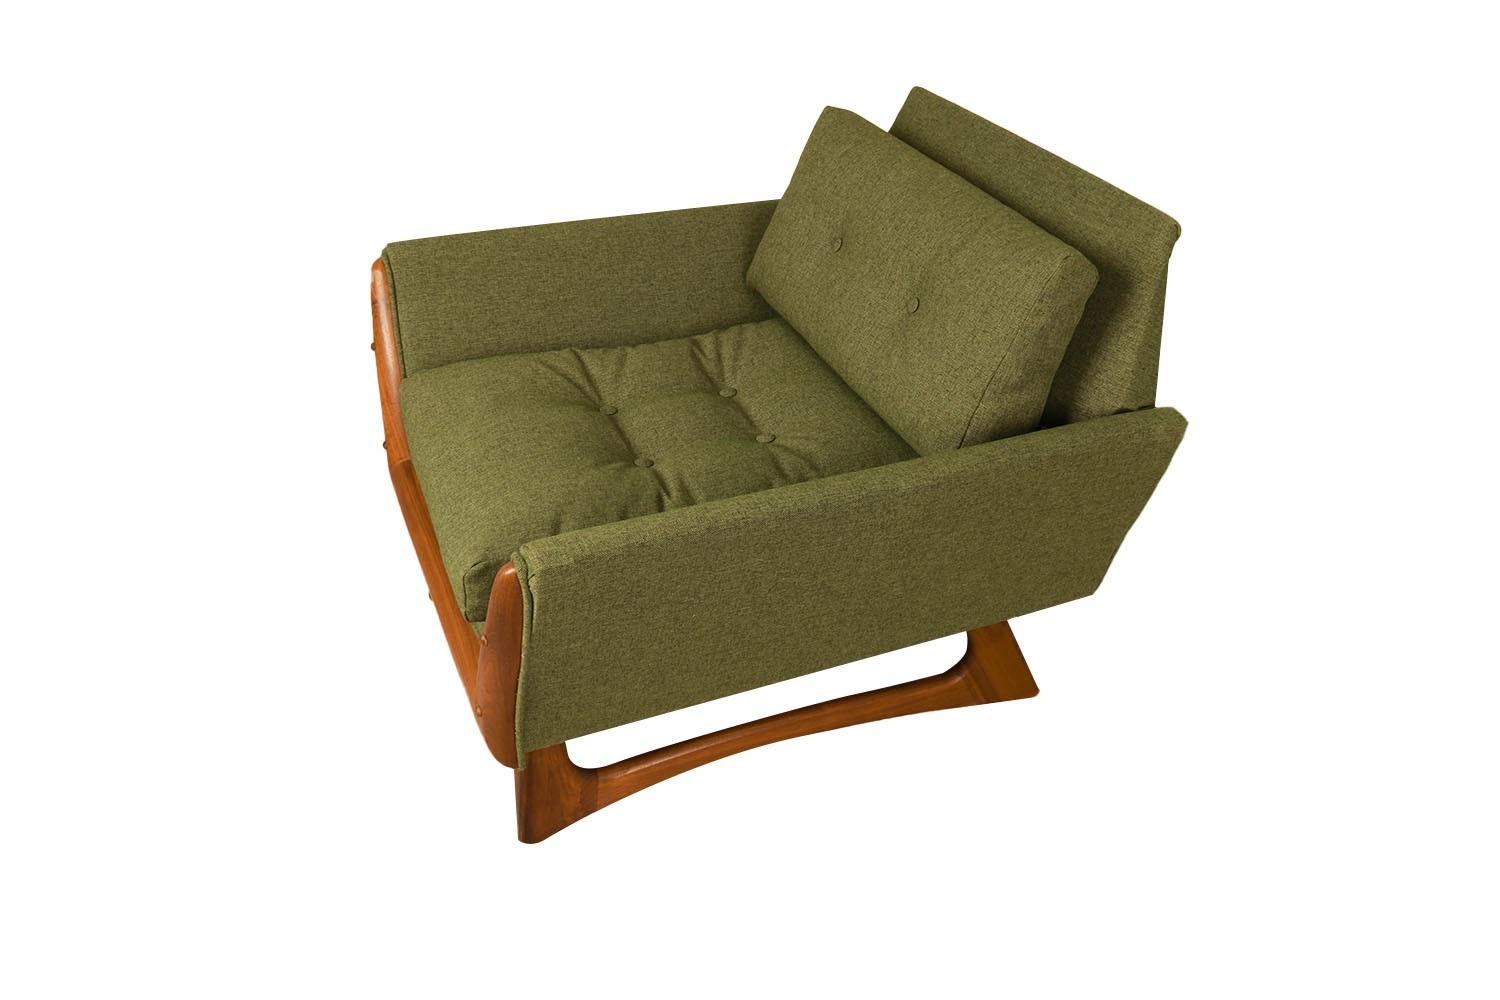 Fabric Adrian Pearsall Lounge Chair Mid-Century Modern 